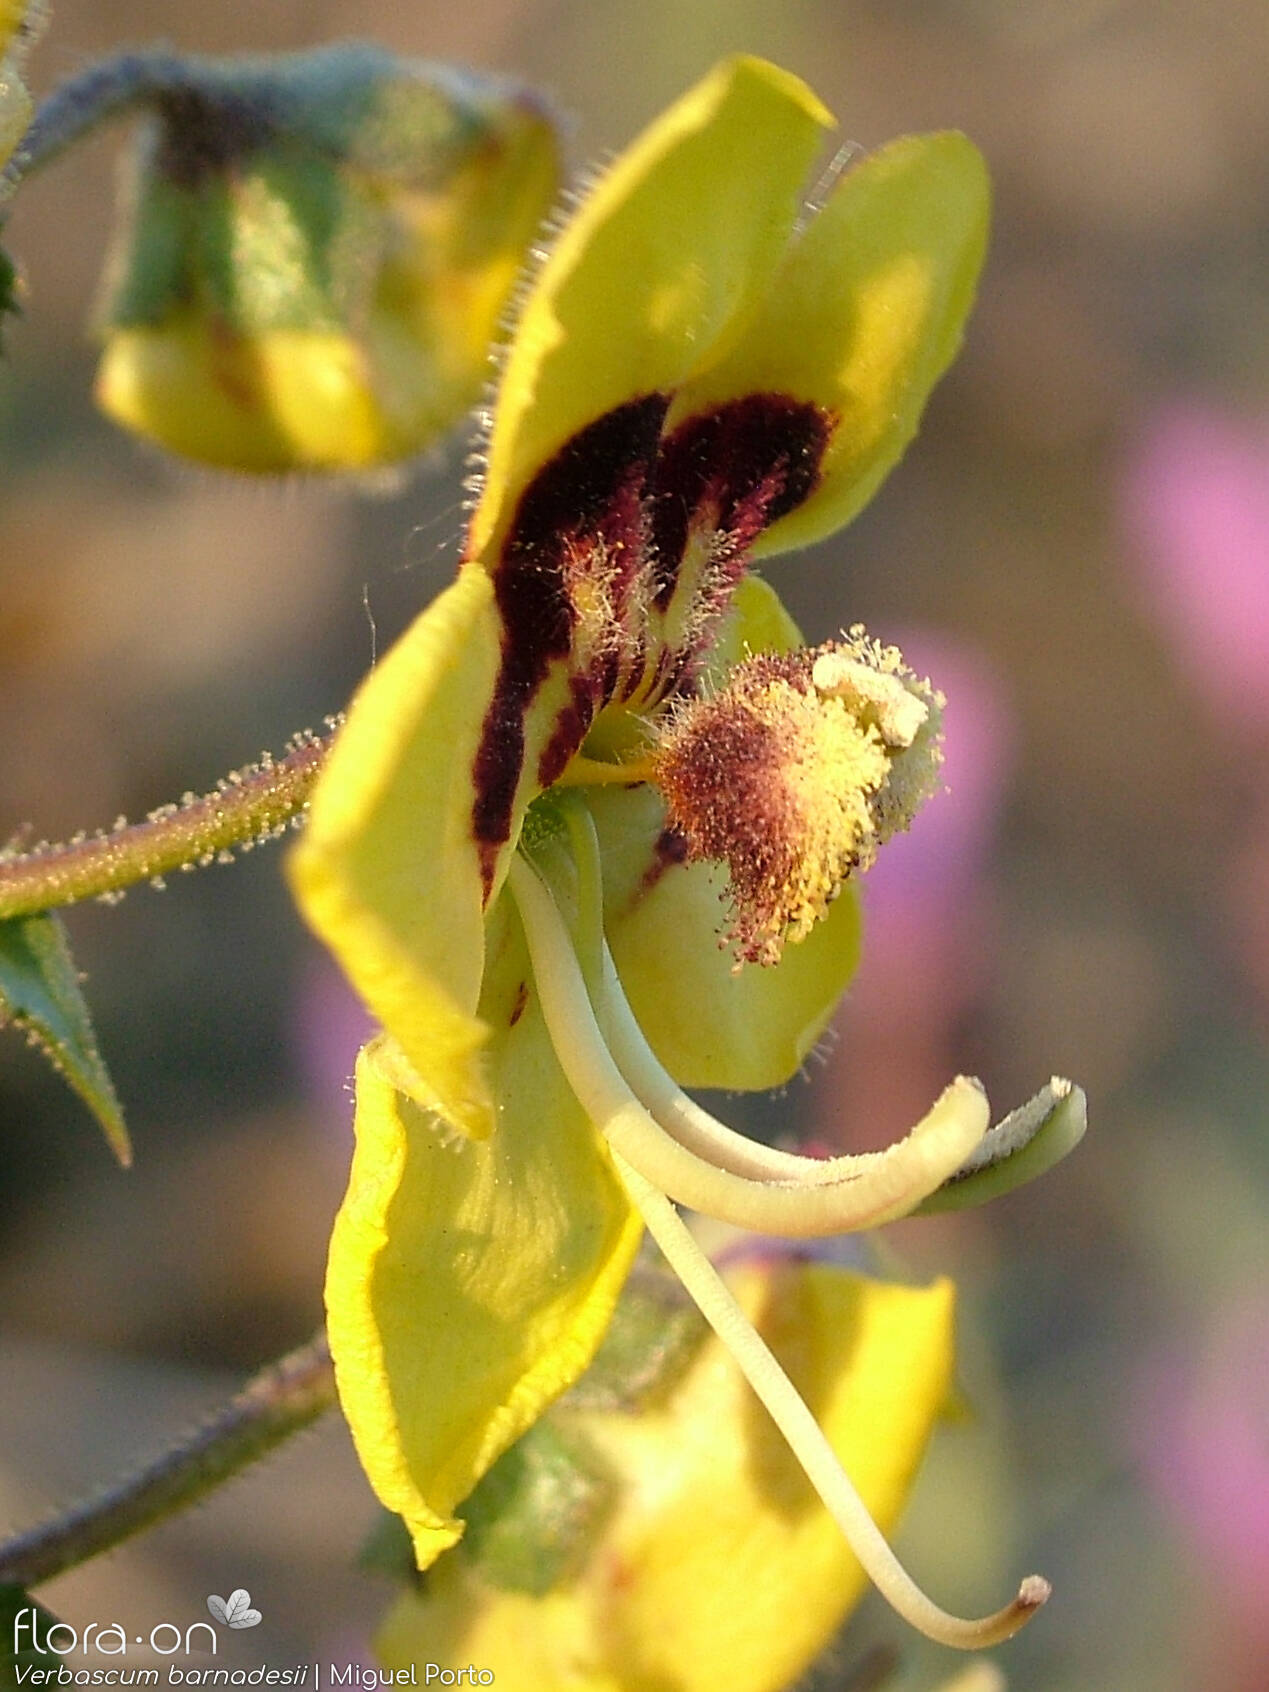 Verbascum barnadesii - Flor (close-up) | Miguel Porto; CC BY-NC 4.0